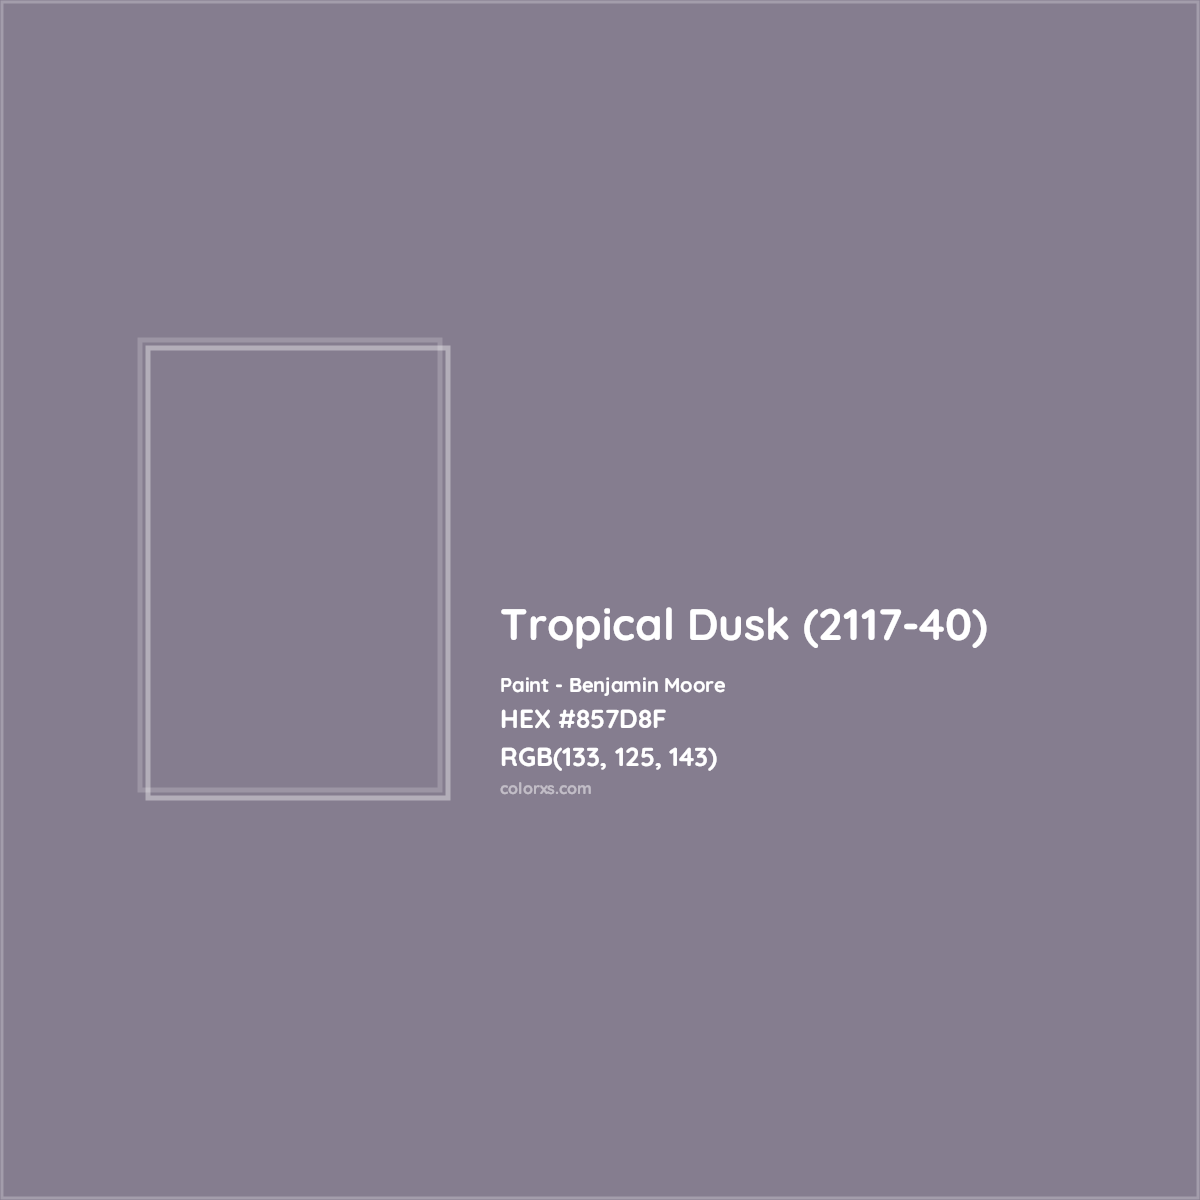 HEX #857D8F Tropical Dusk (2117-40) Paint Benjamin Moore - Color Code